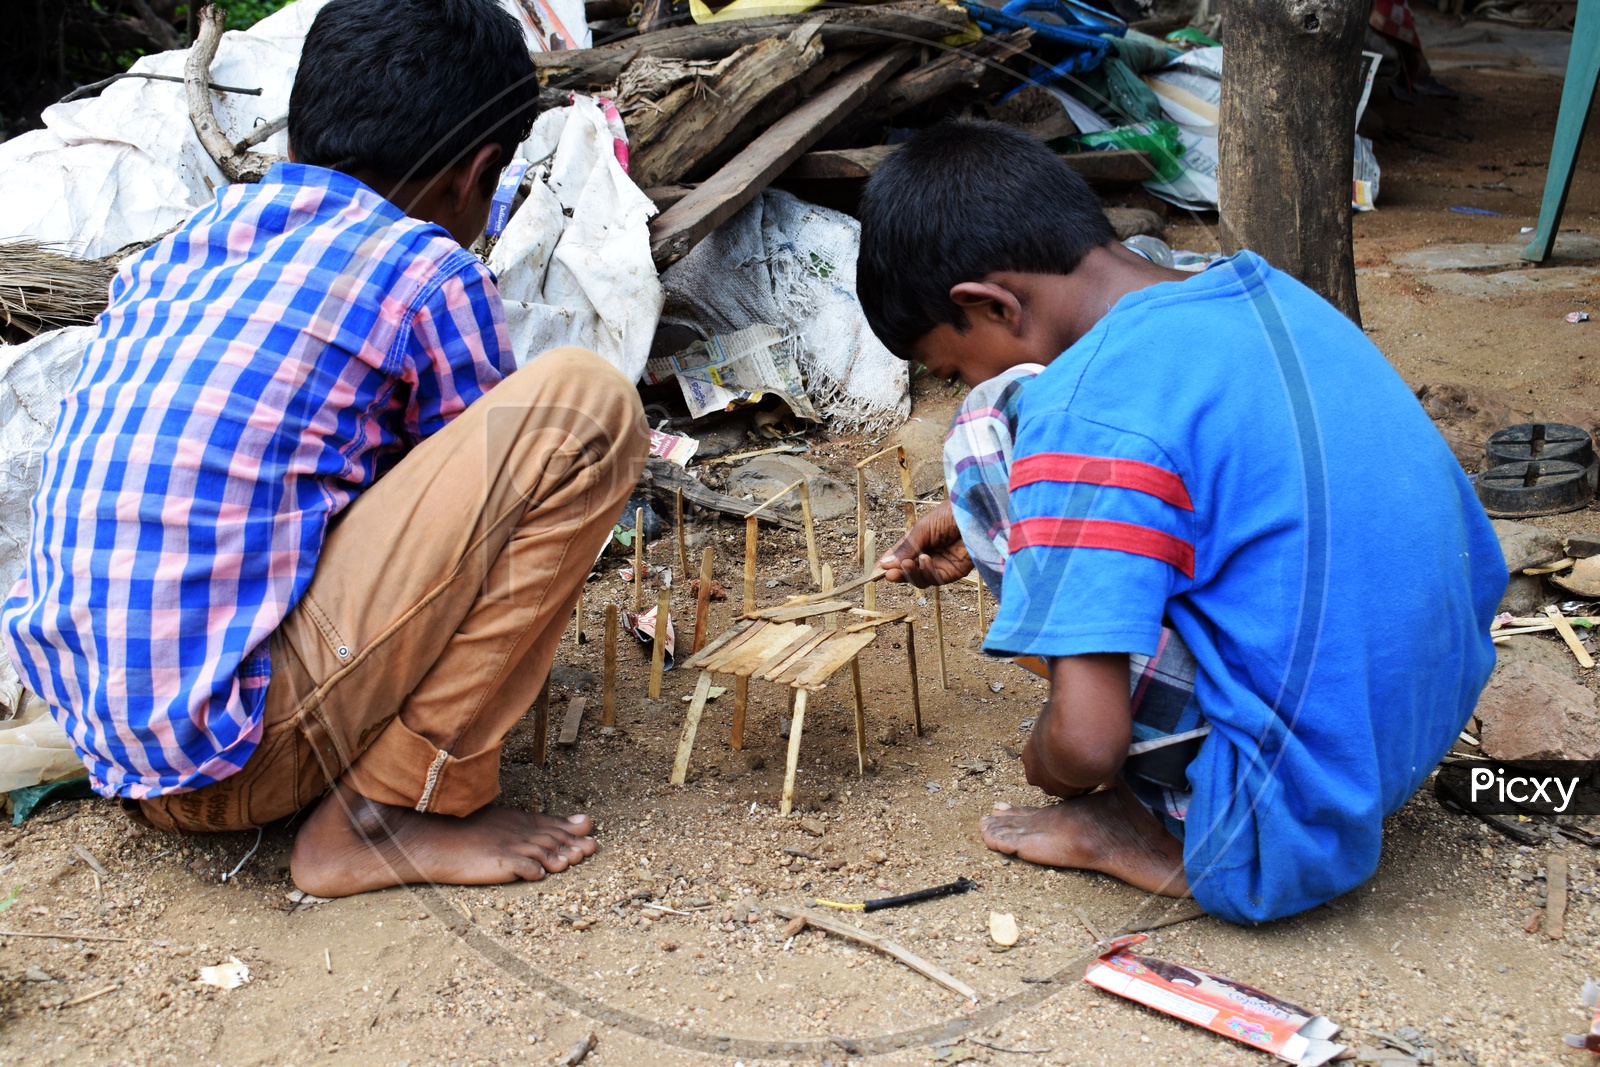 Children observe a lot, Encourage Children's Creative play. Children making toy house with sticks. 